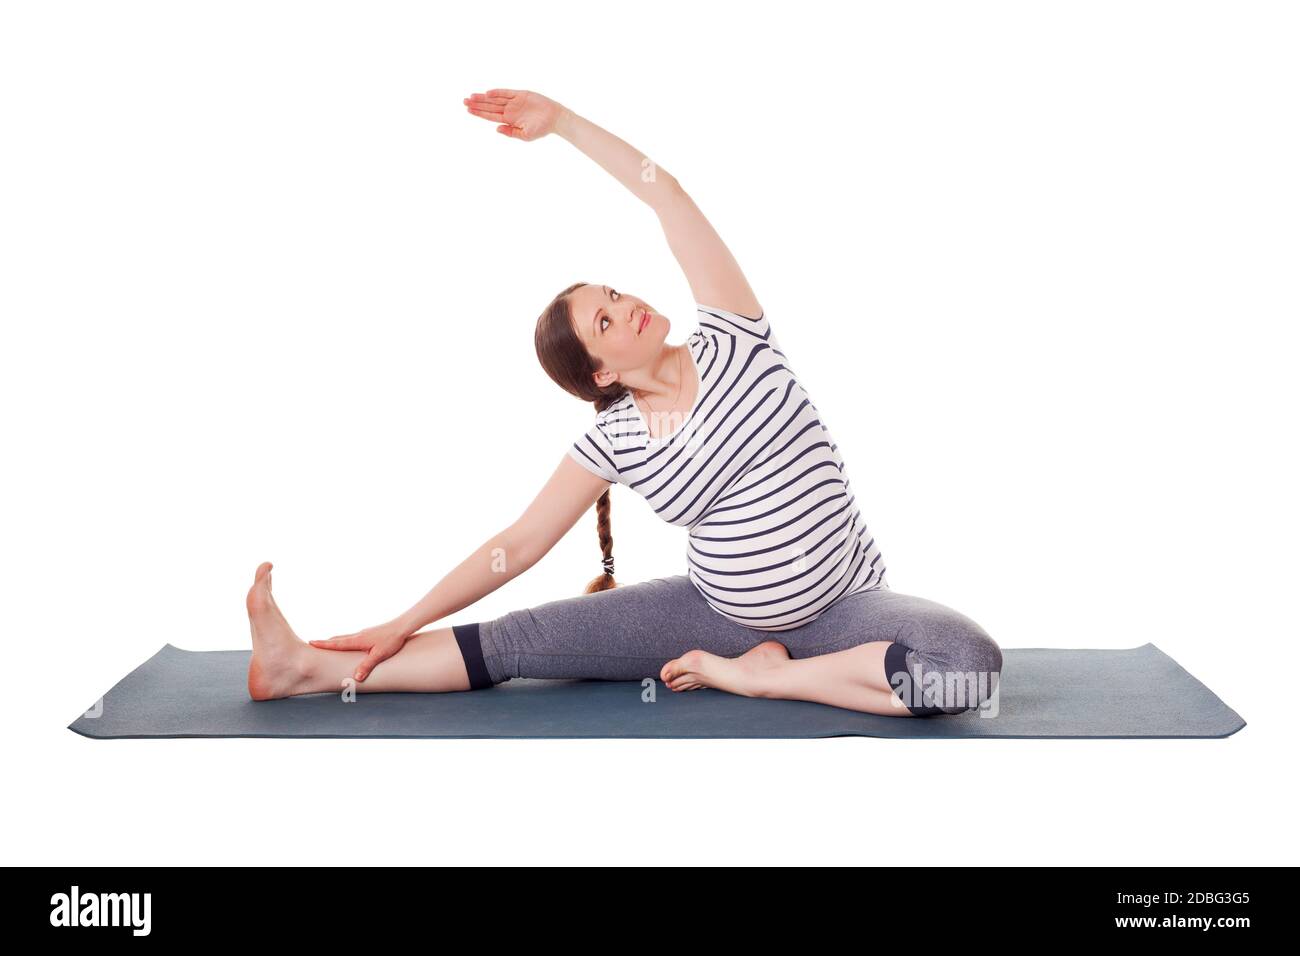 Gravidanza yoga esercizio - donna incinta facendo asana Parivrtta janu sirsasana testa a ginocchio posa isolata su sfondo bianco Foto Stock